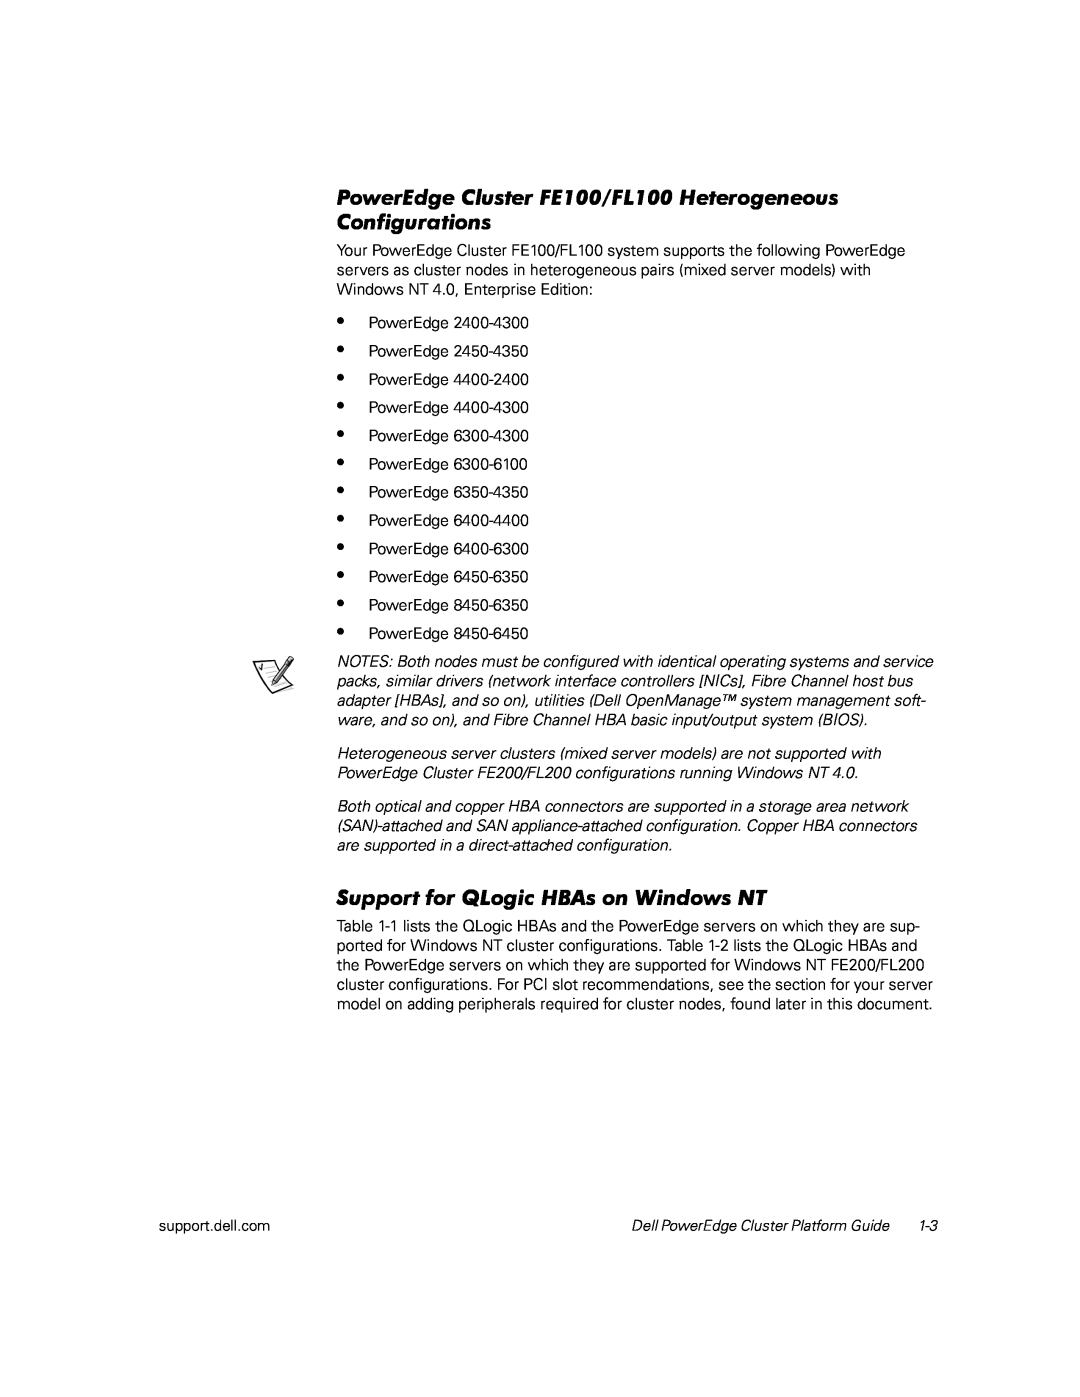 Dell FL200, FE100, FL100, FE200 manual Support for QLogic HBAs on Windows NT, • • • • • • • • • • • •, PowerEdge PowerEdge 